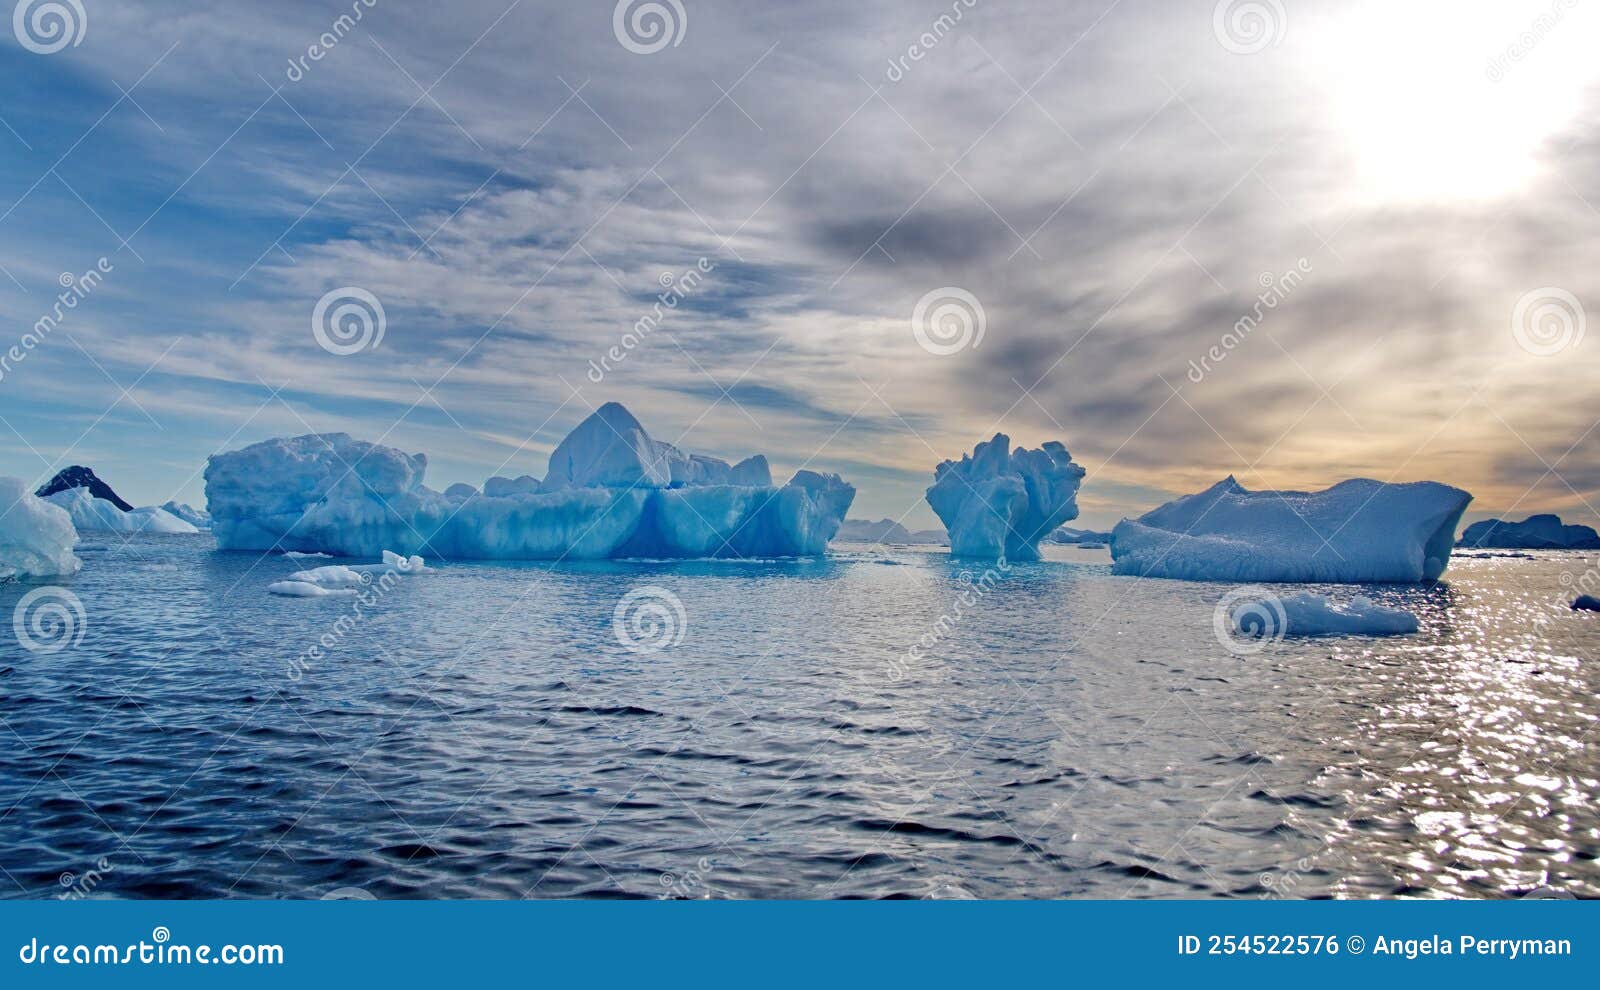 icebergs floating in cierva cove under sunlight